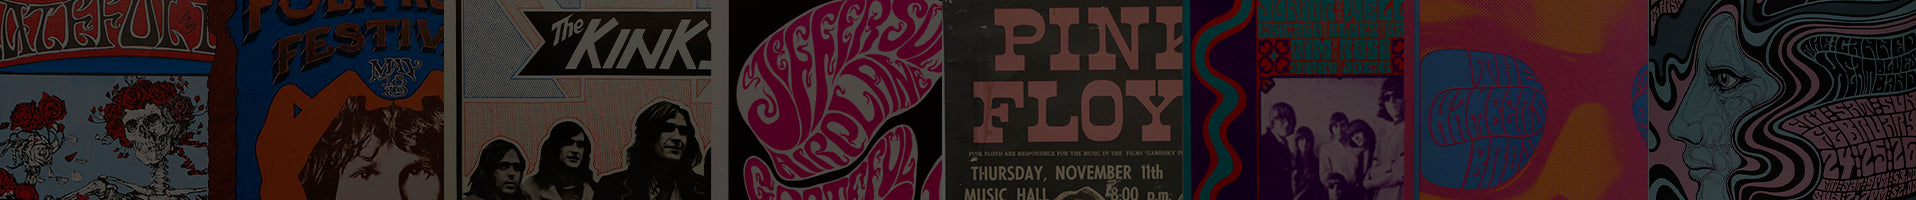 Concert Posters & Prints